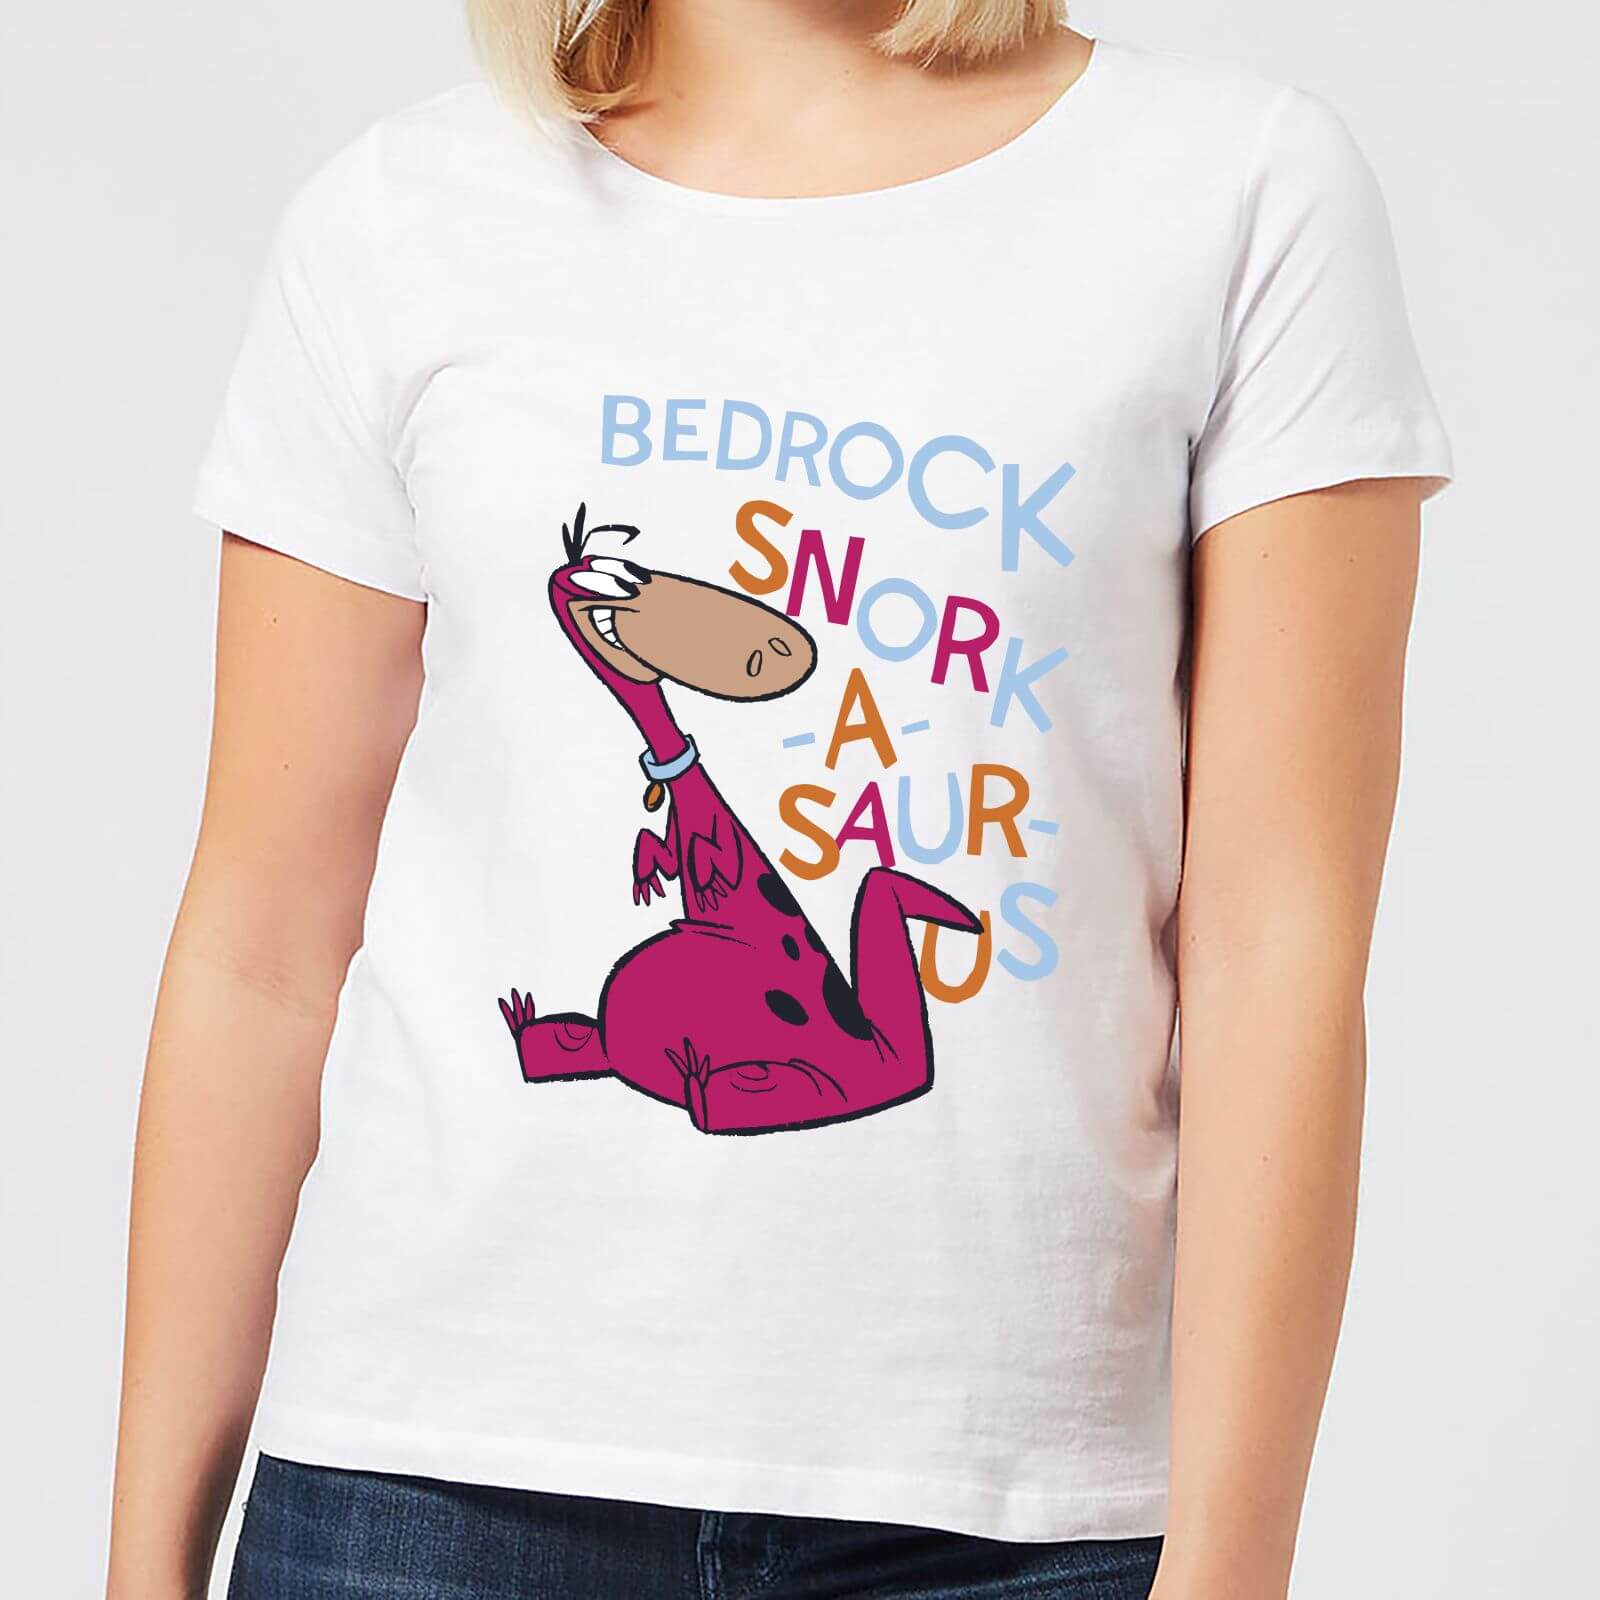 The Flintstones Bedrock Snork-A-Saur-Us Women's T-Shirt - White - XL - White